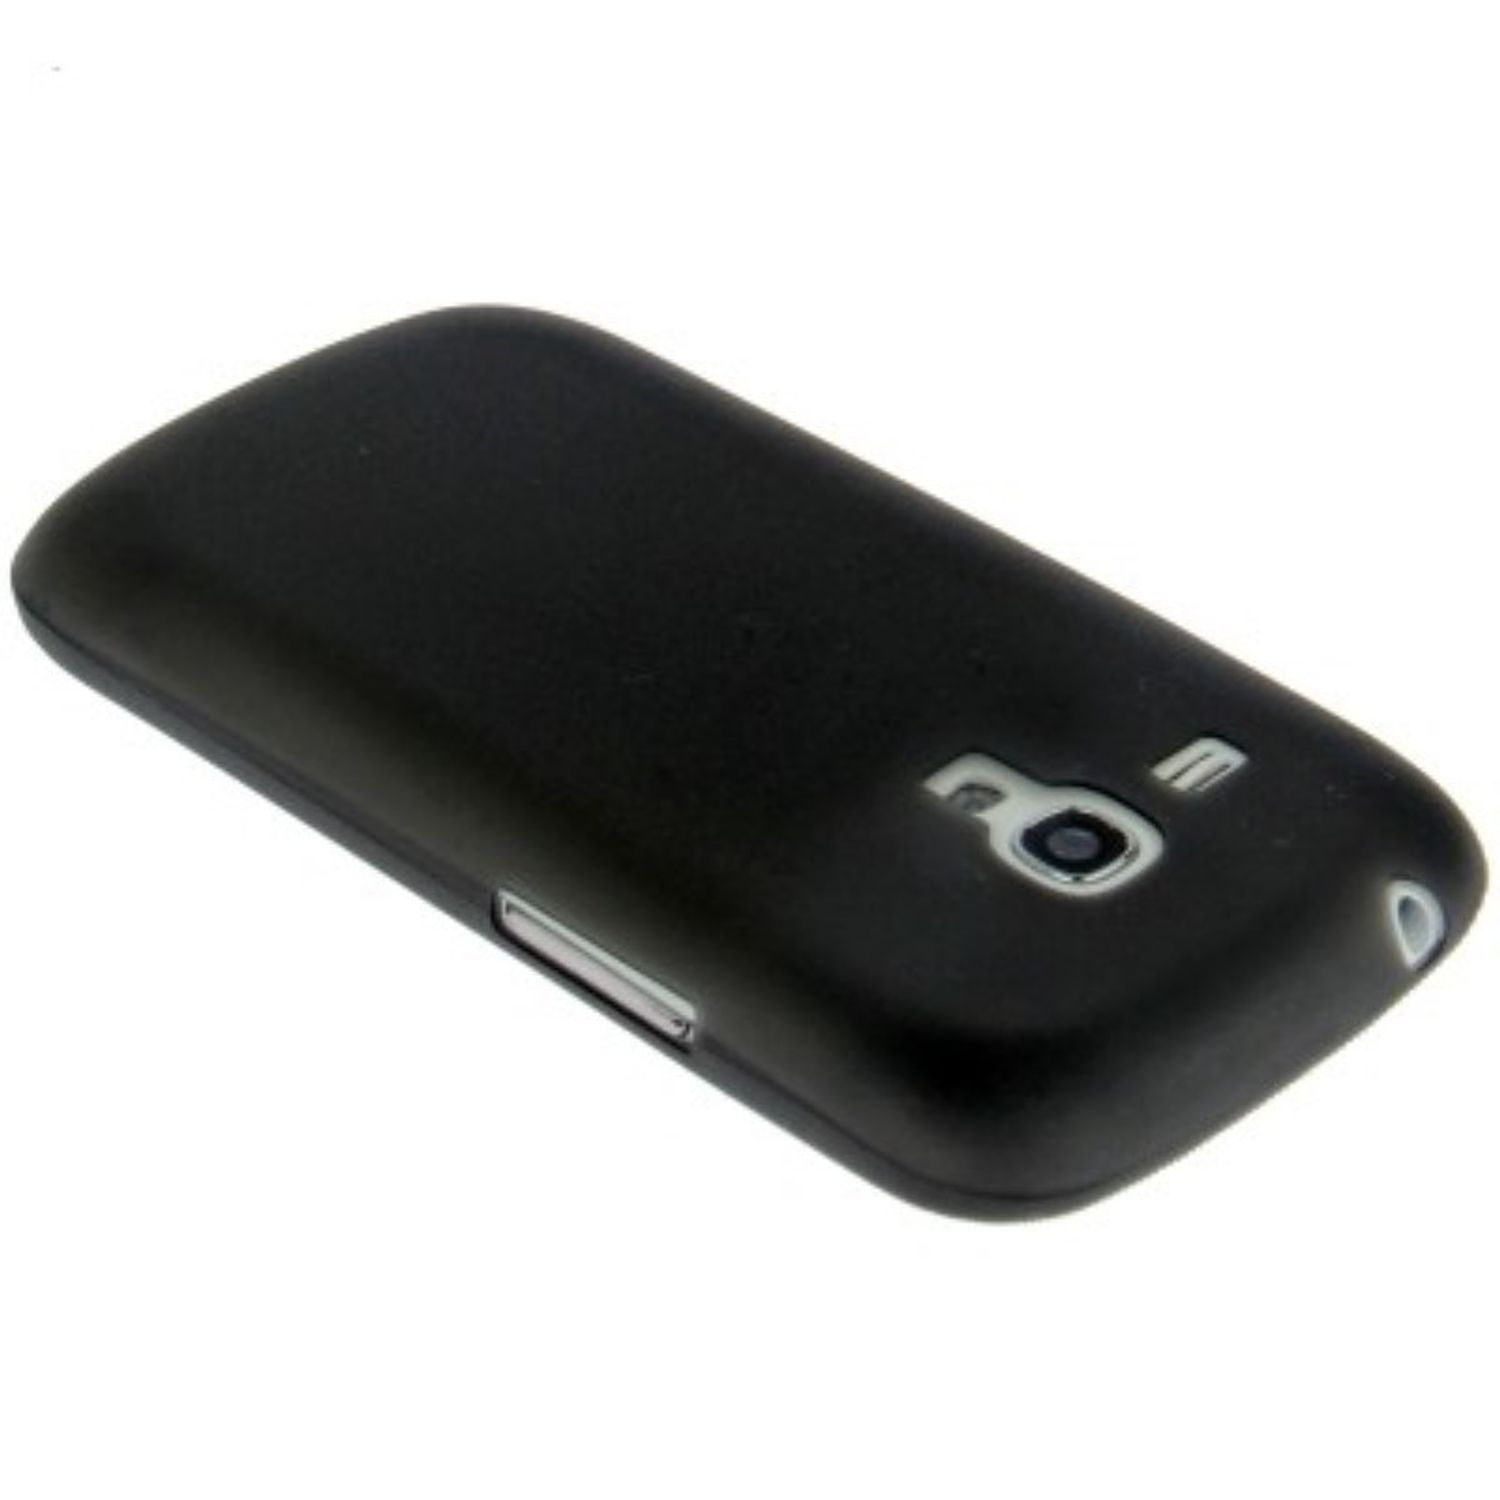 Mini, DESIGN Violett S3 Galaxy Samsung, Backcover, KÖNIG Schutzhülle,